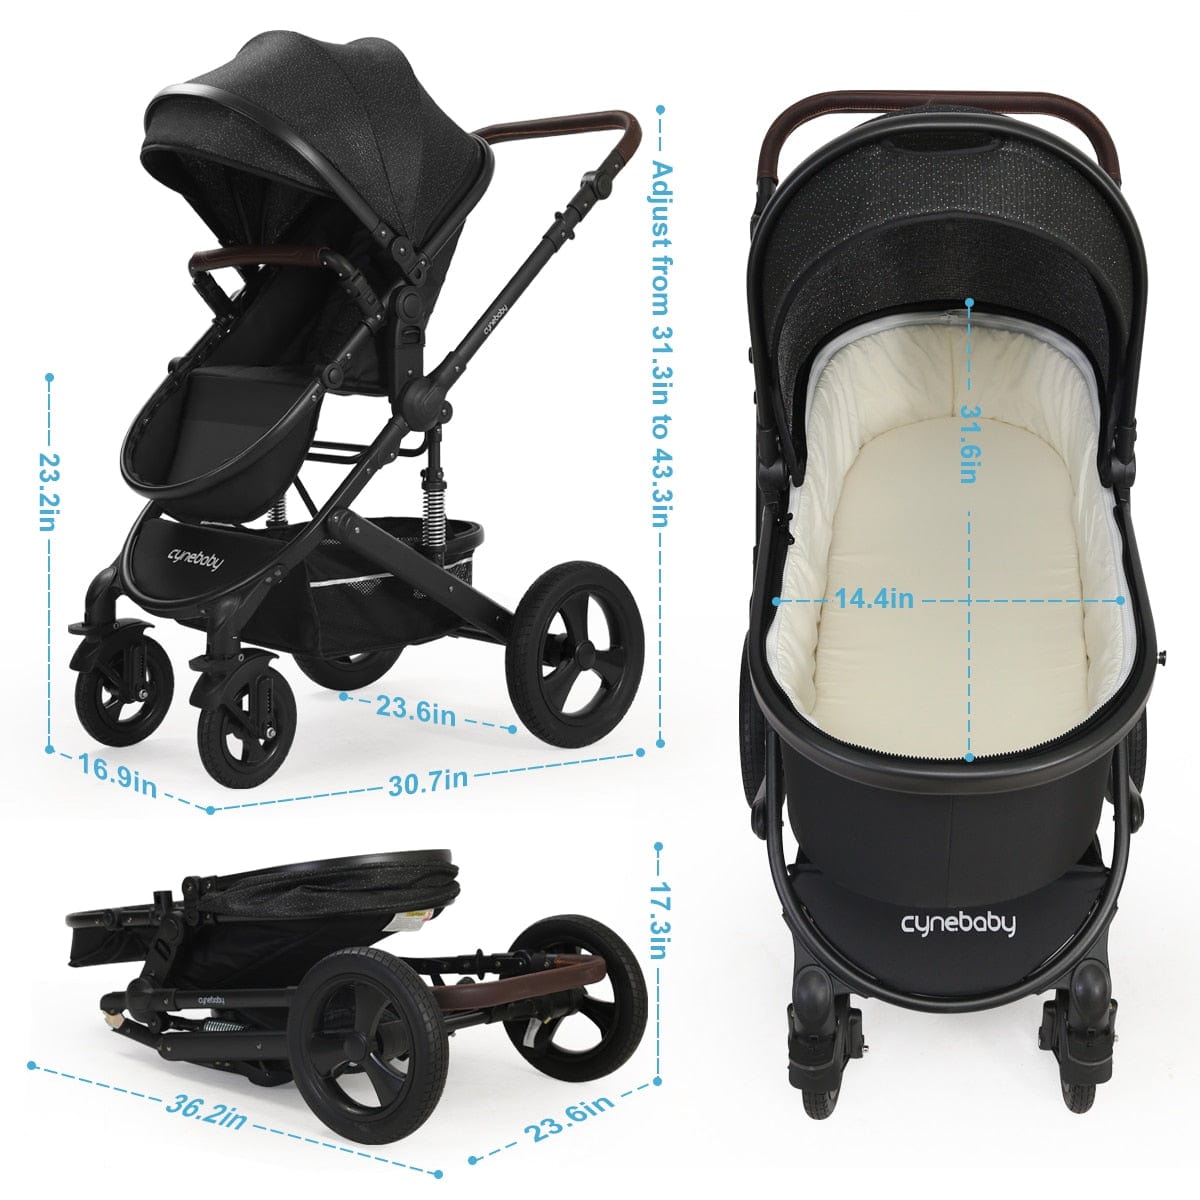 Proactive Baby Cynebaby 2 in 1 Convertible Cradle Stroller